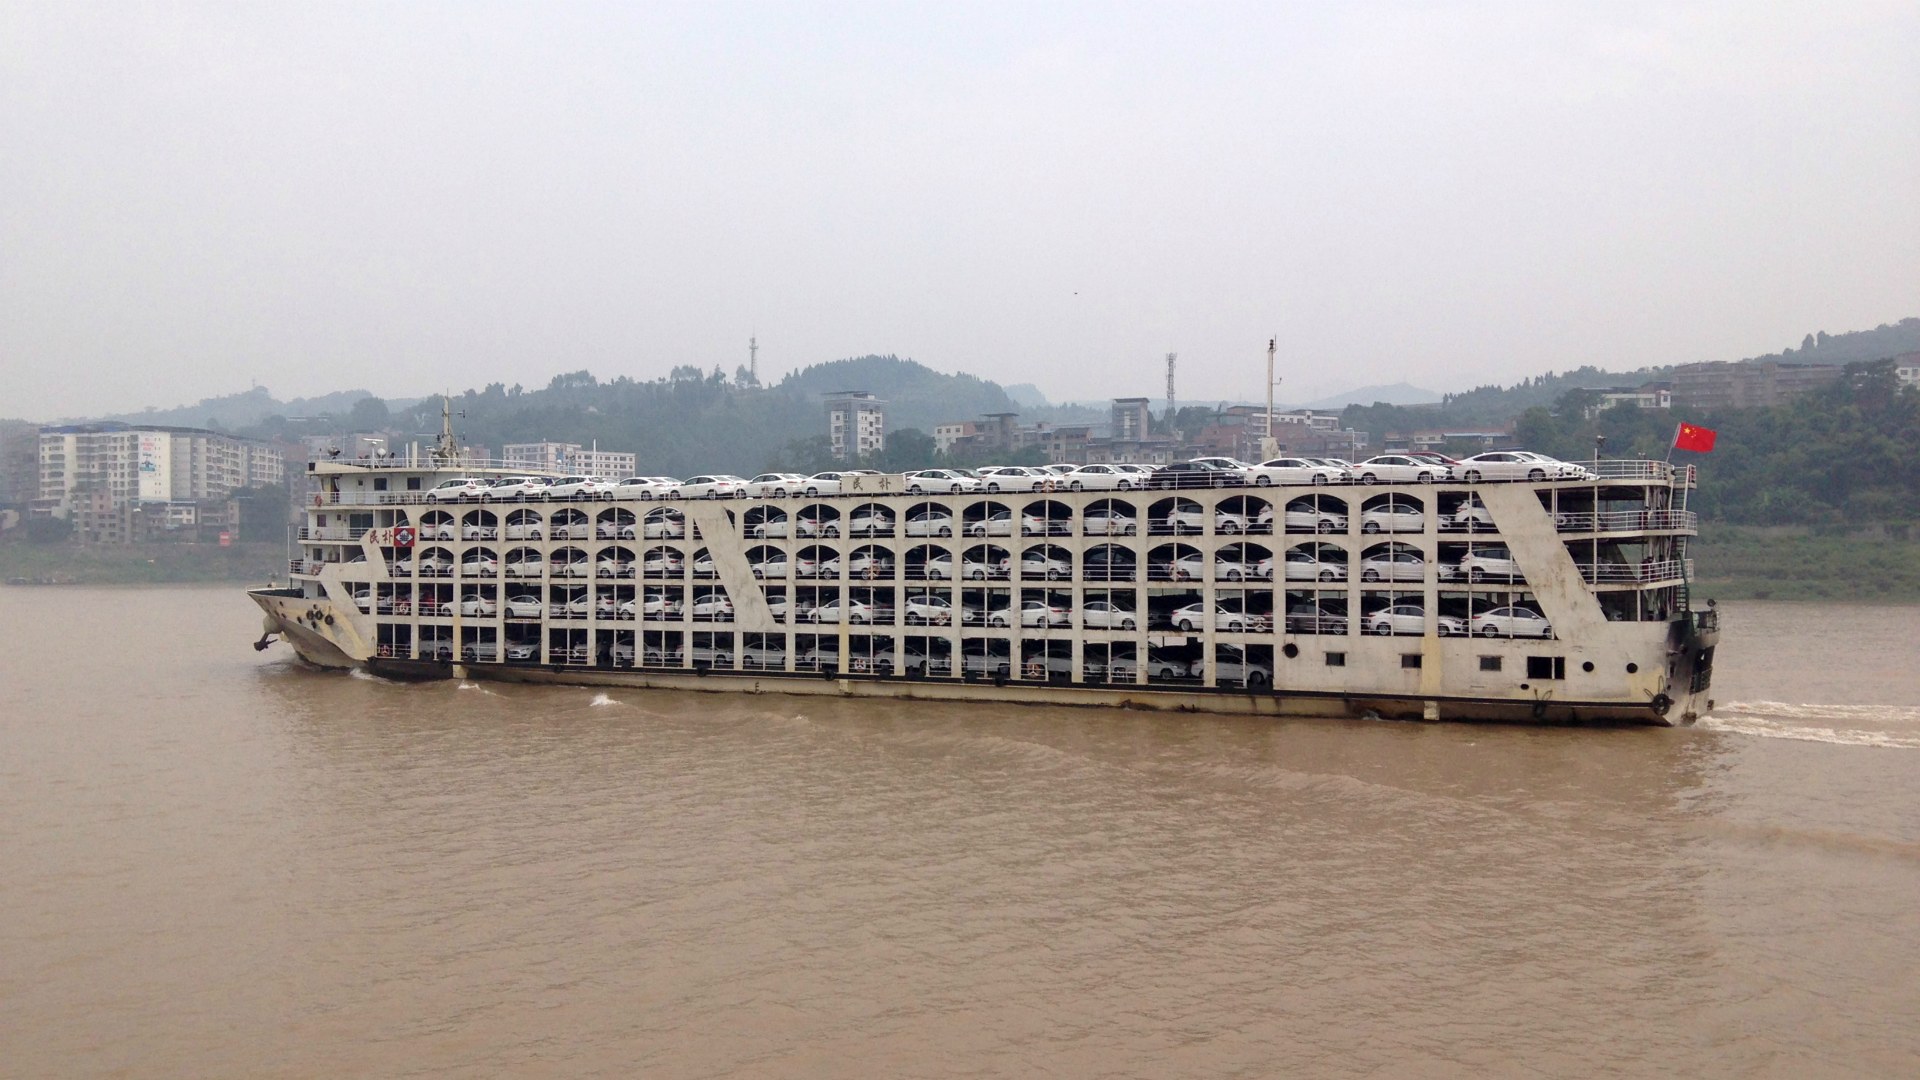 Car Transporter, Yangtze River